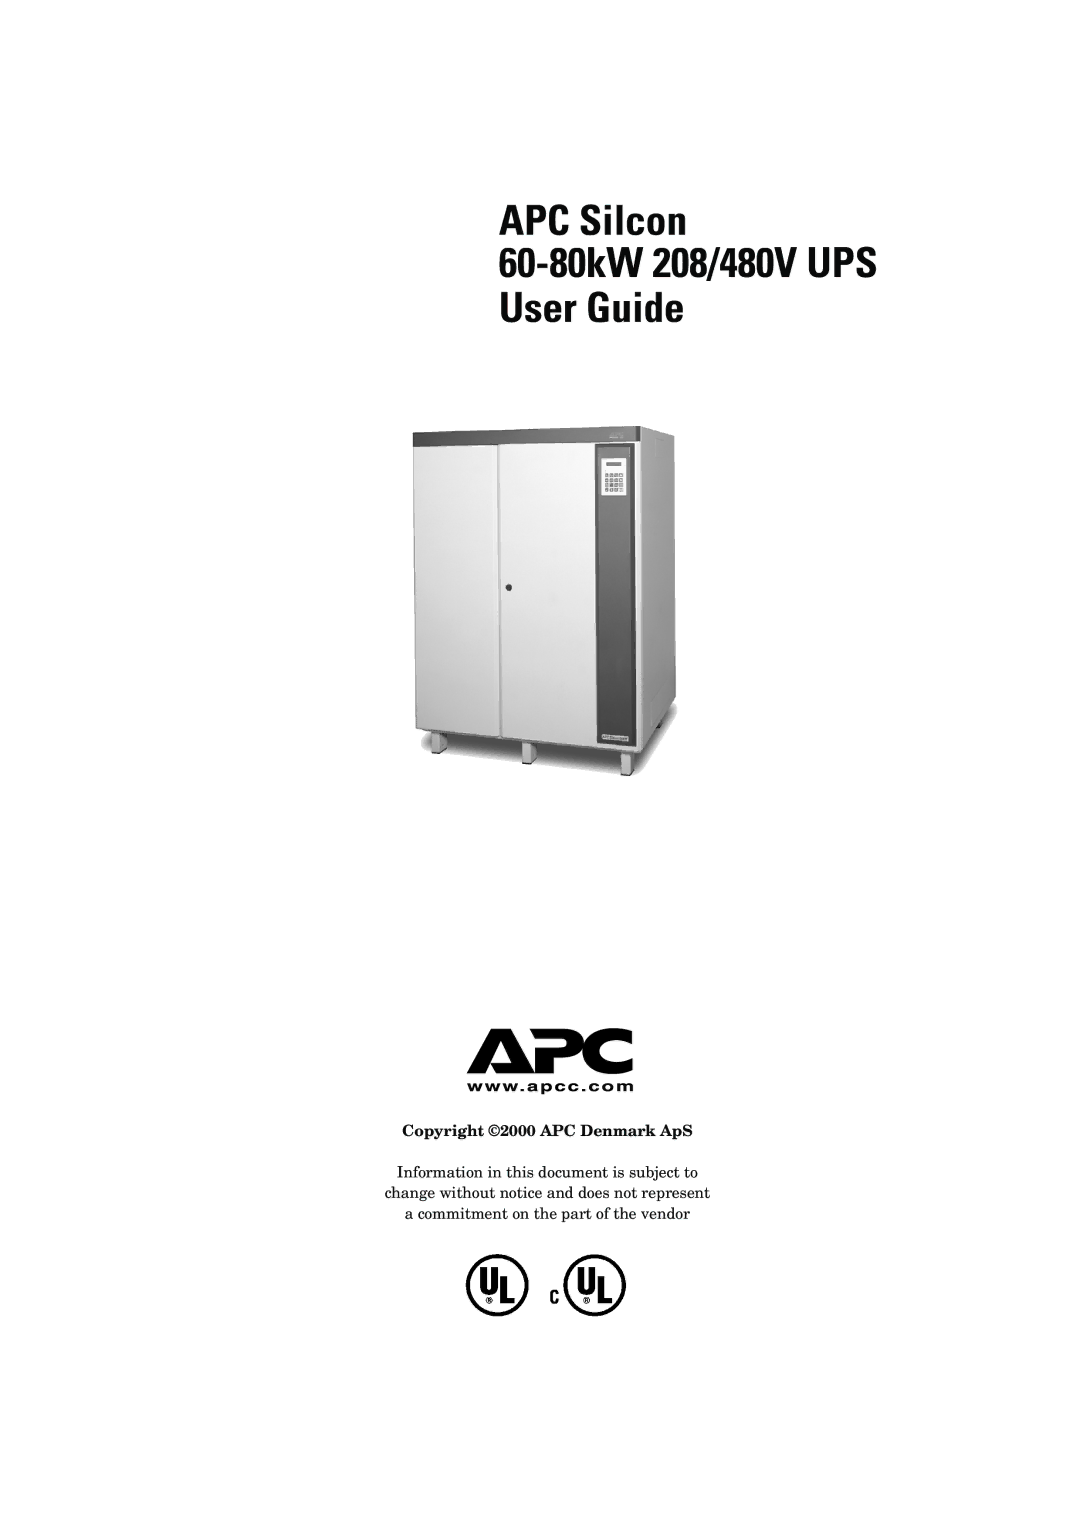 American Power Conversion manual APC Silcon 60-80kW 208/480V UPS User Guide, Copyright 2000 APC Denmark ApS 